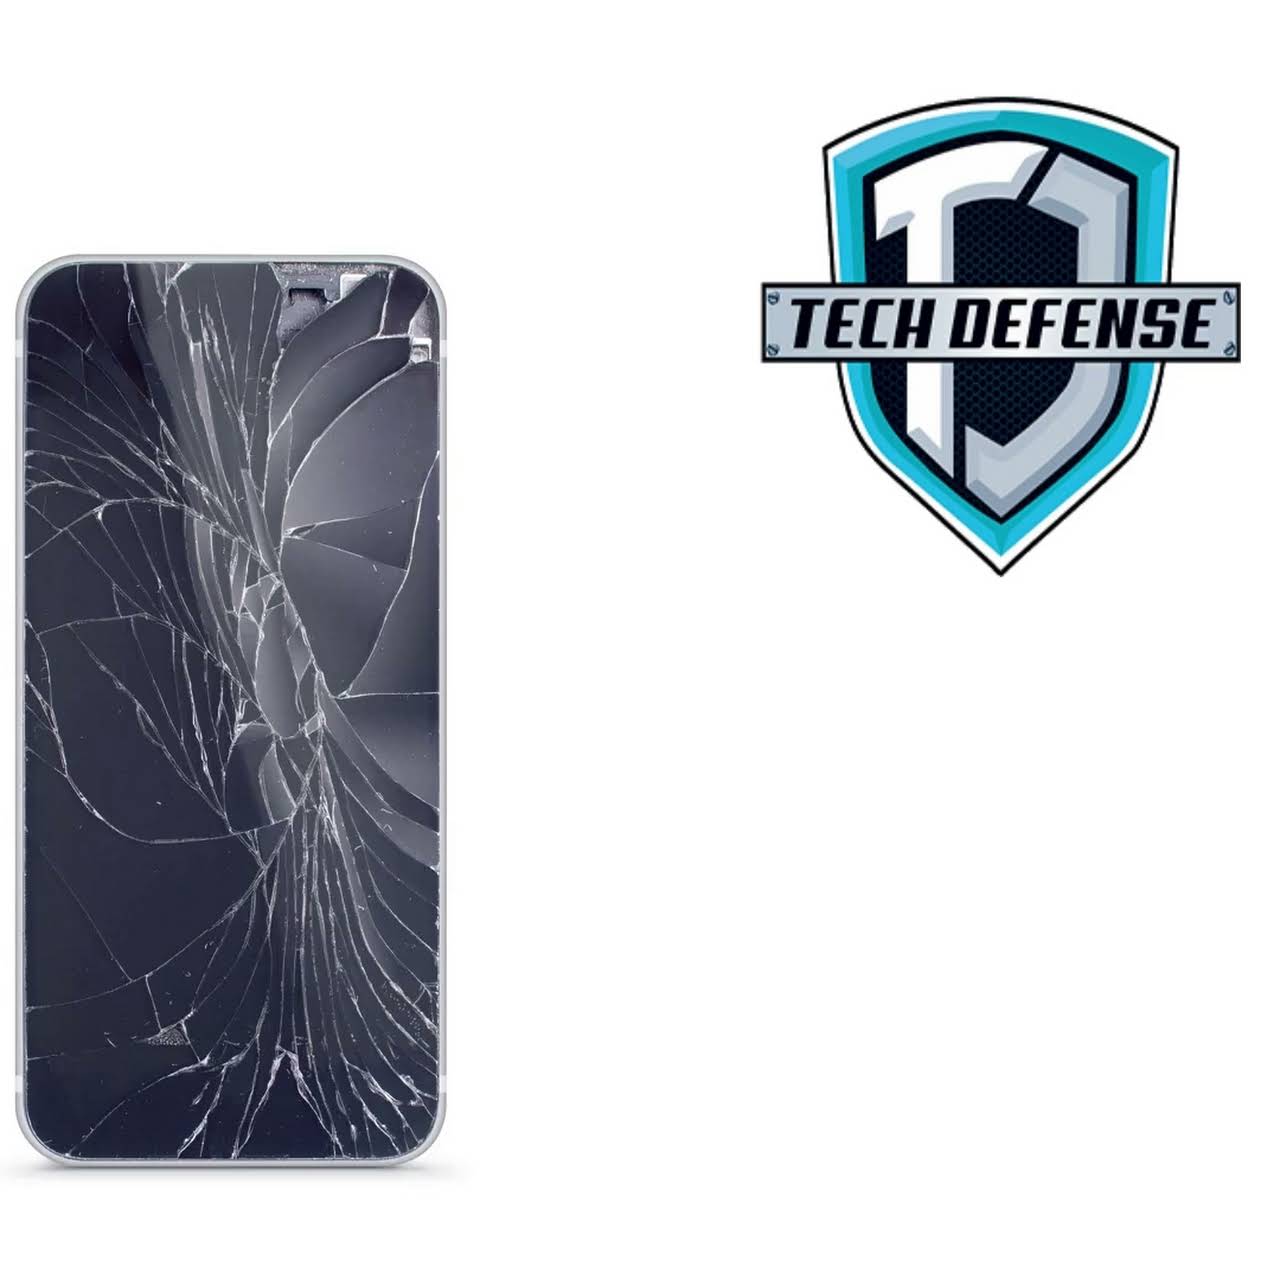 Tech Defense Phone Repair - UTC Mall